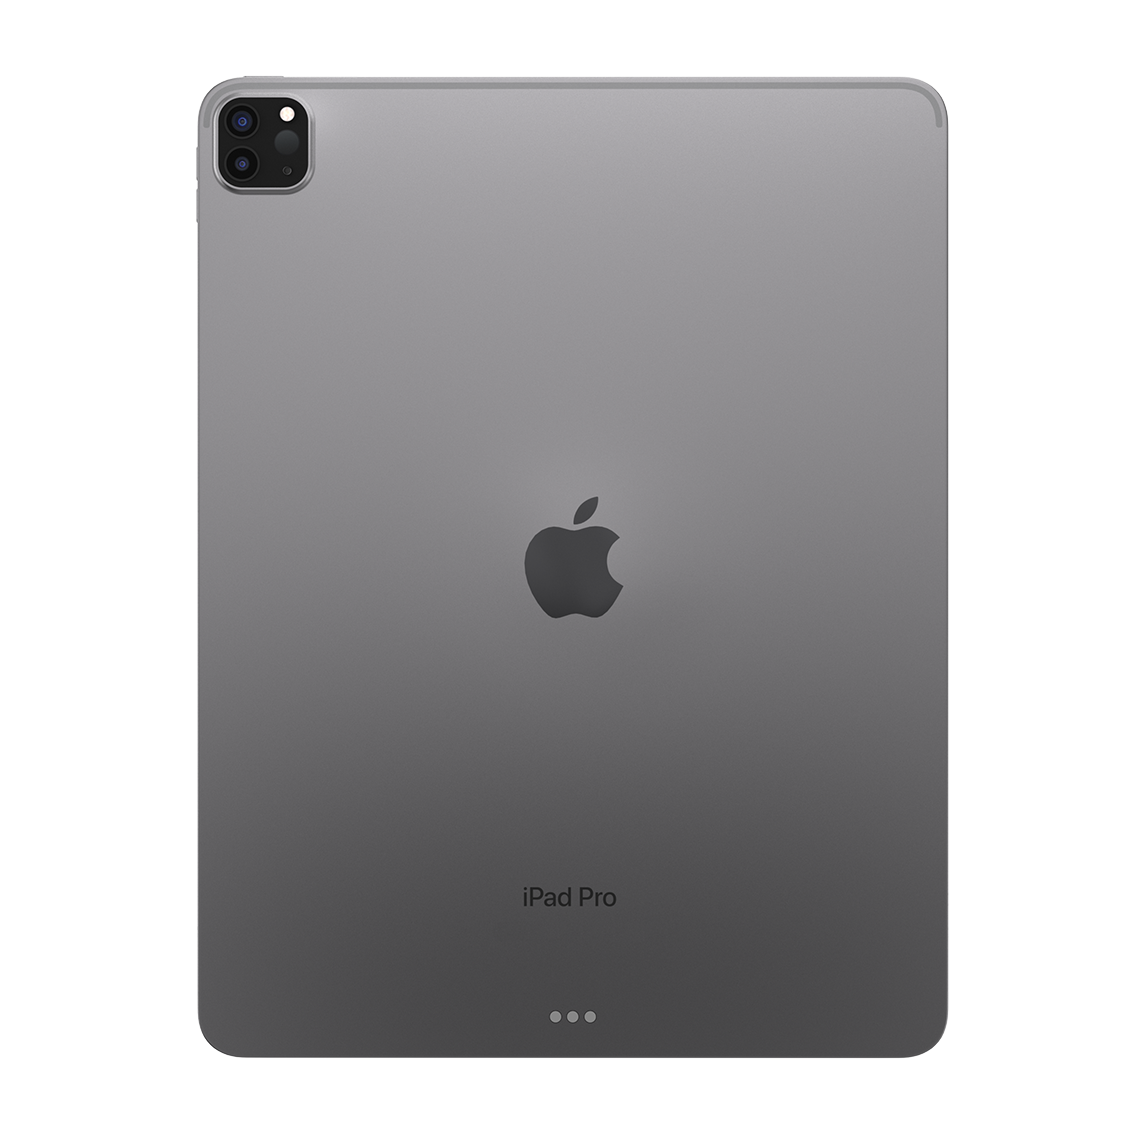 Apple iPad Pro 12.9-inch 6th Generation - Space Gray - 128GB, Wi-Fi + Cellular, Open Box